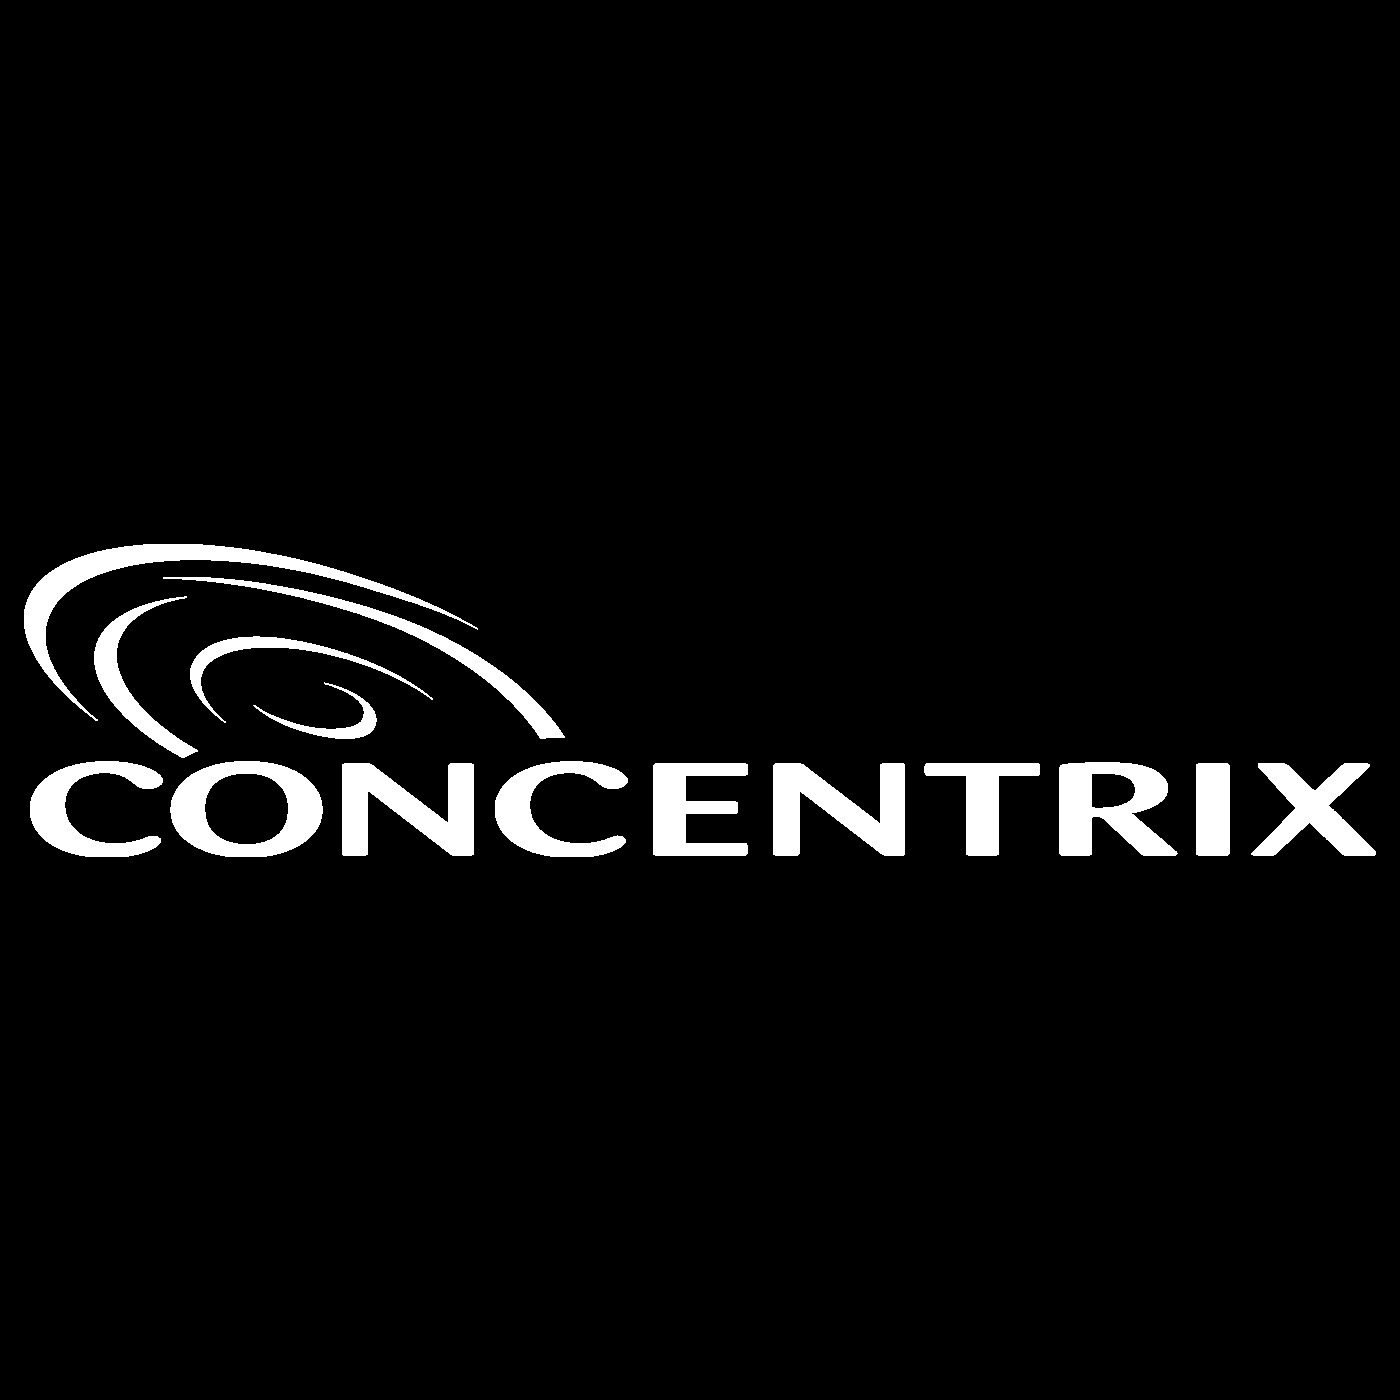 Concentrix Logo White - The Server Cover Letter